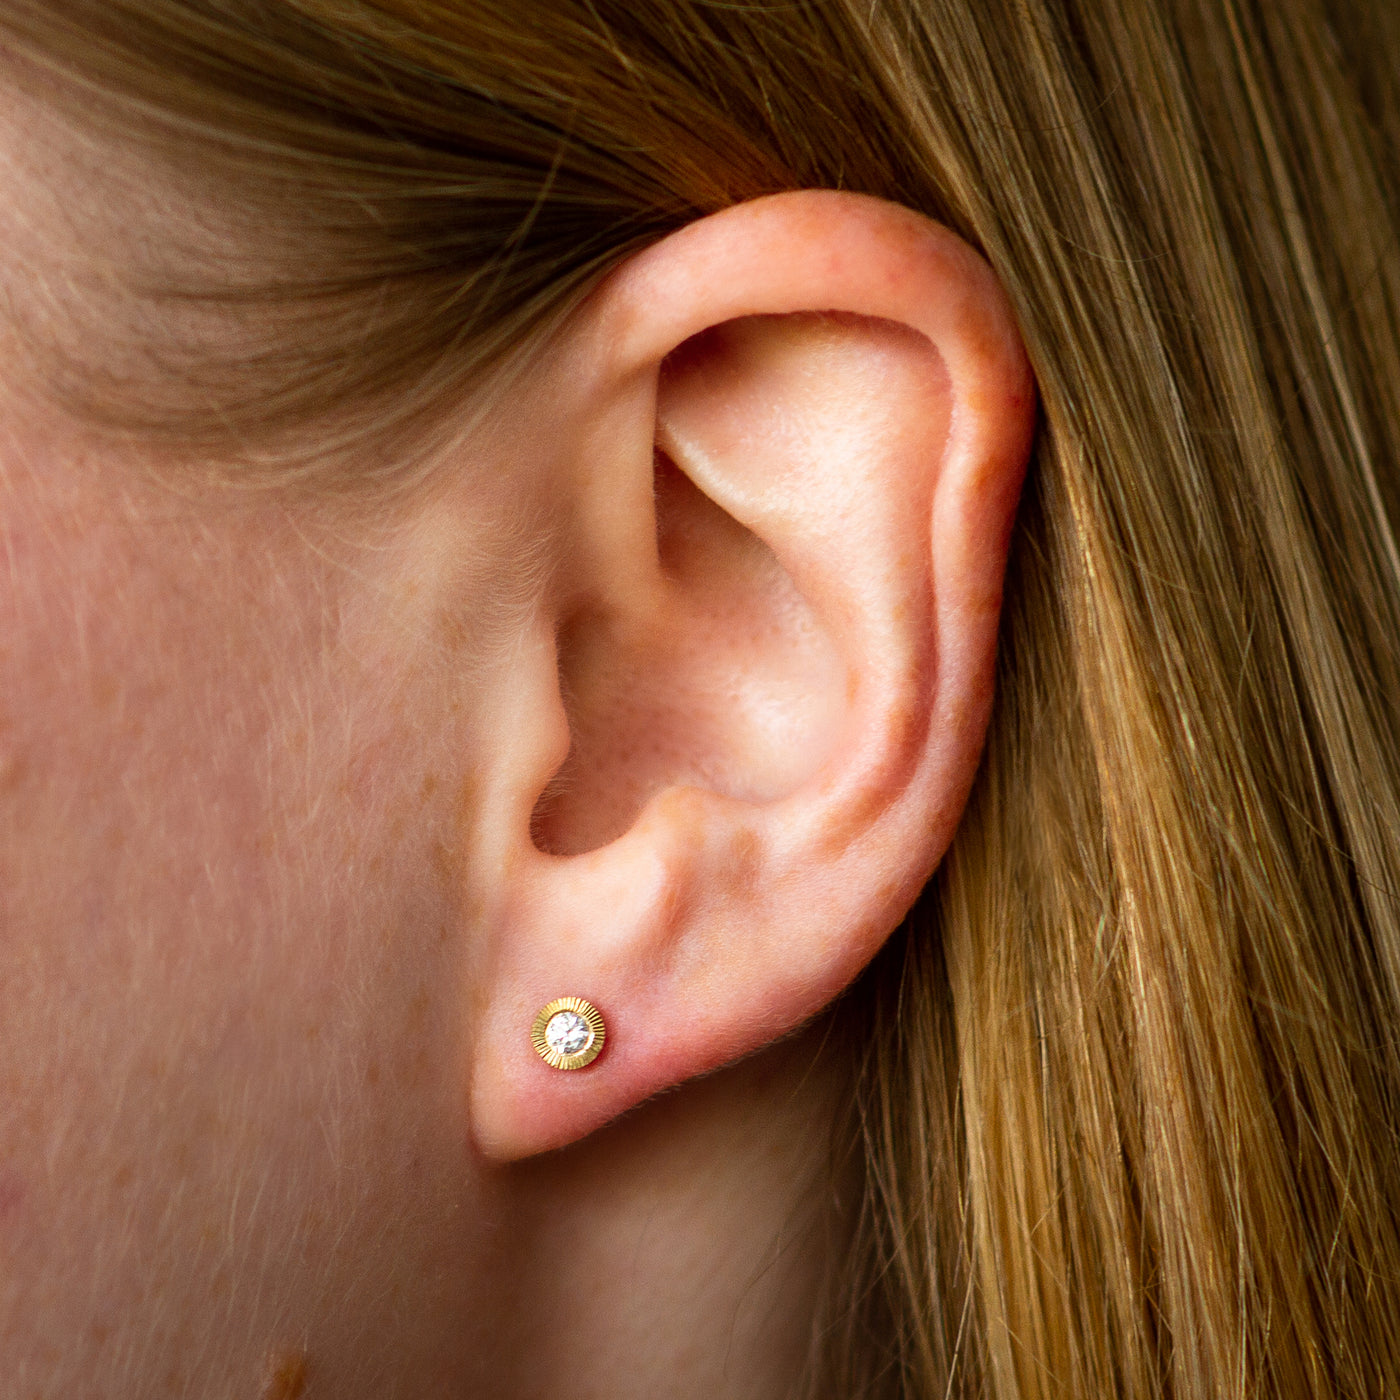 Medium Aurora Diamond Stud Earring in Yellow Gold on an ear